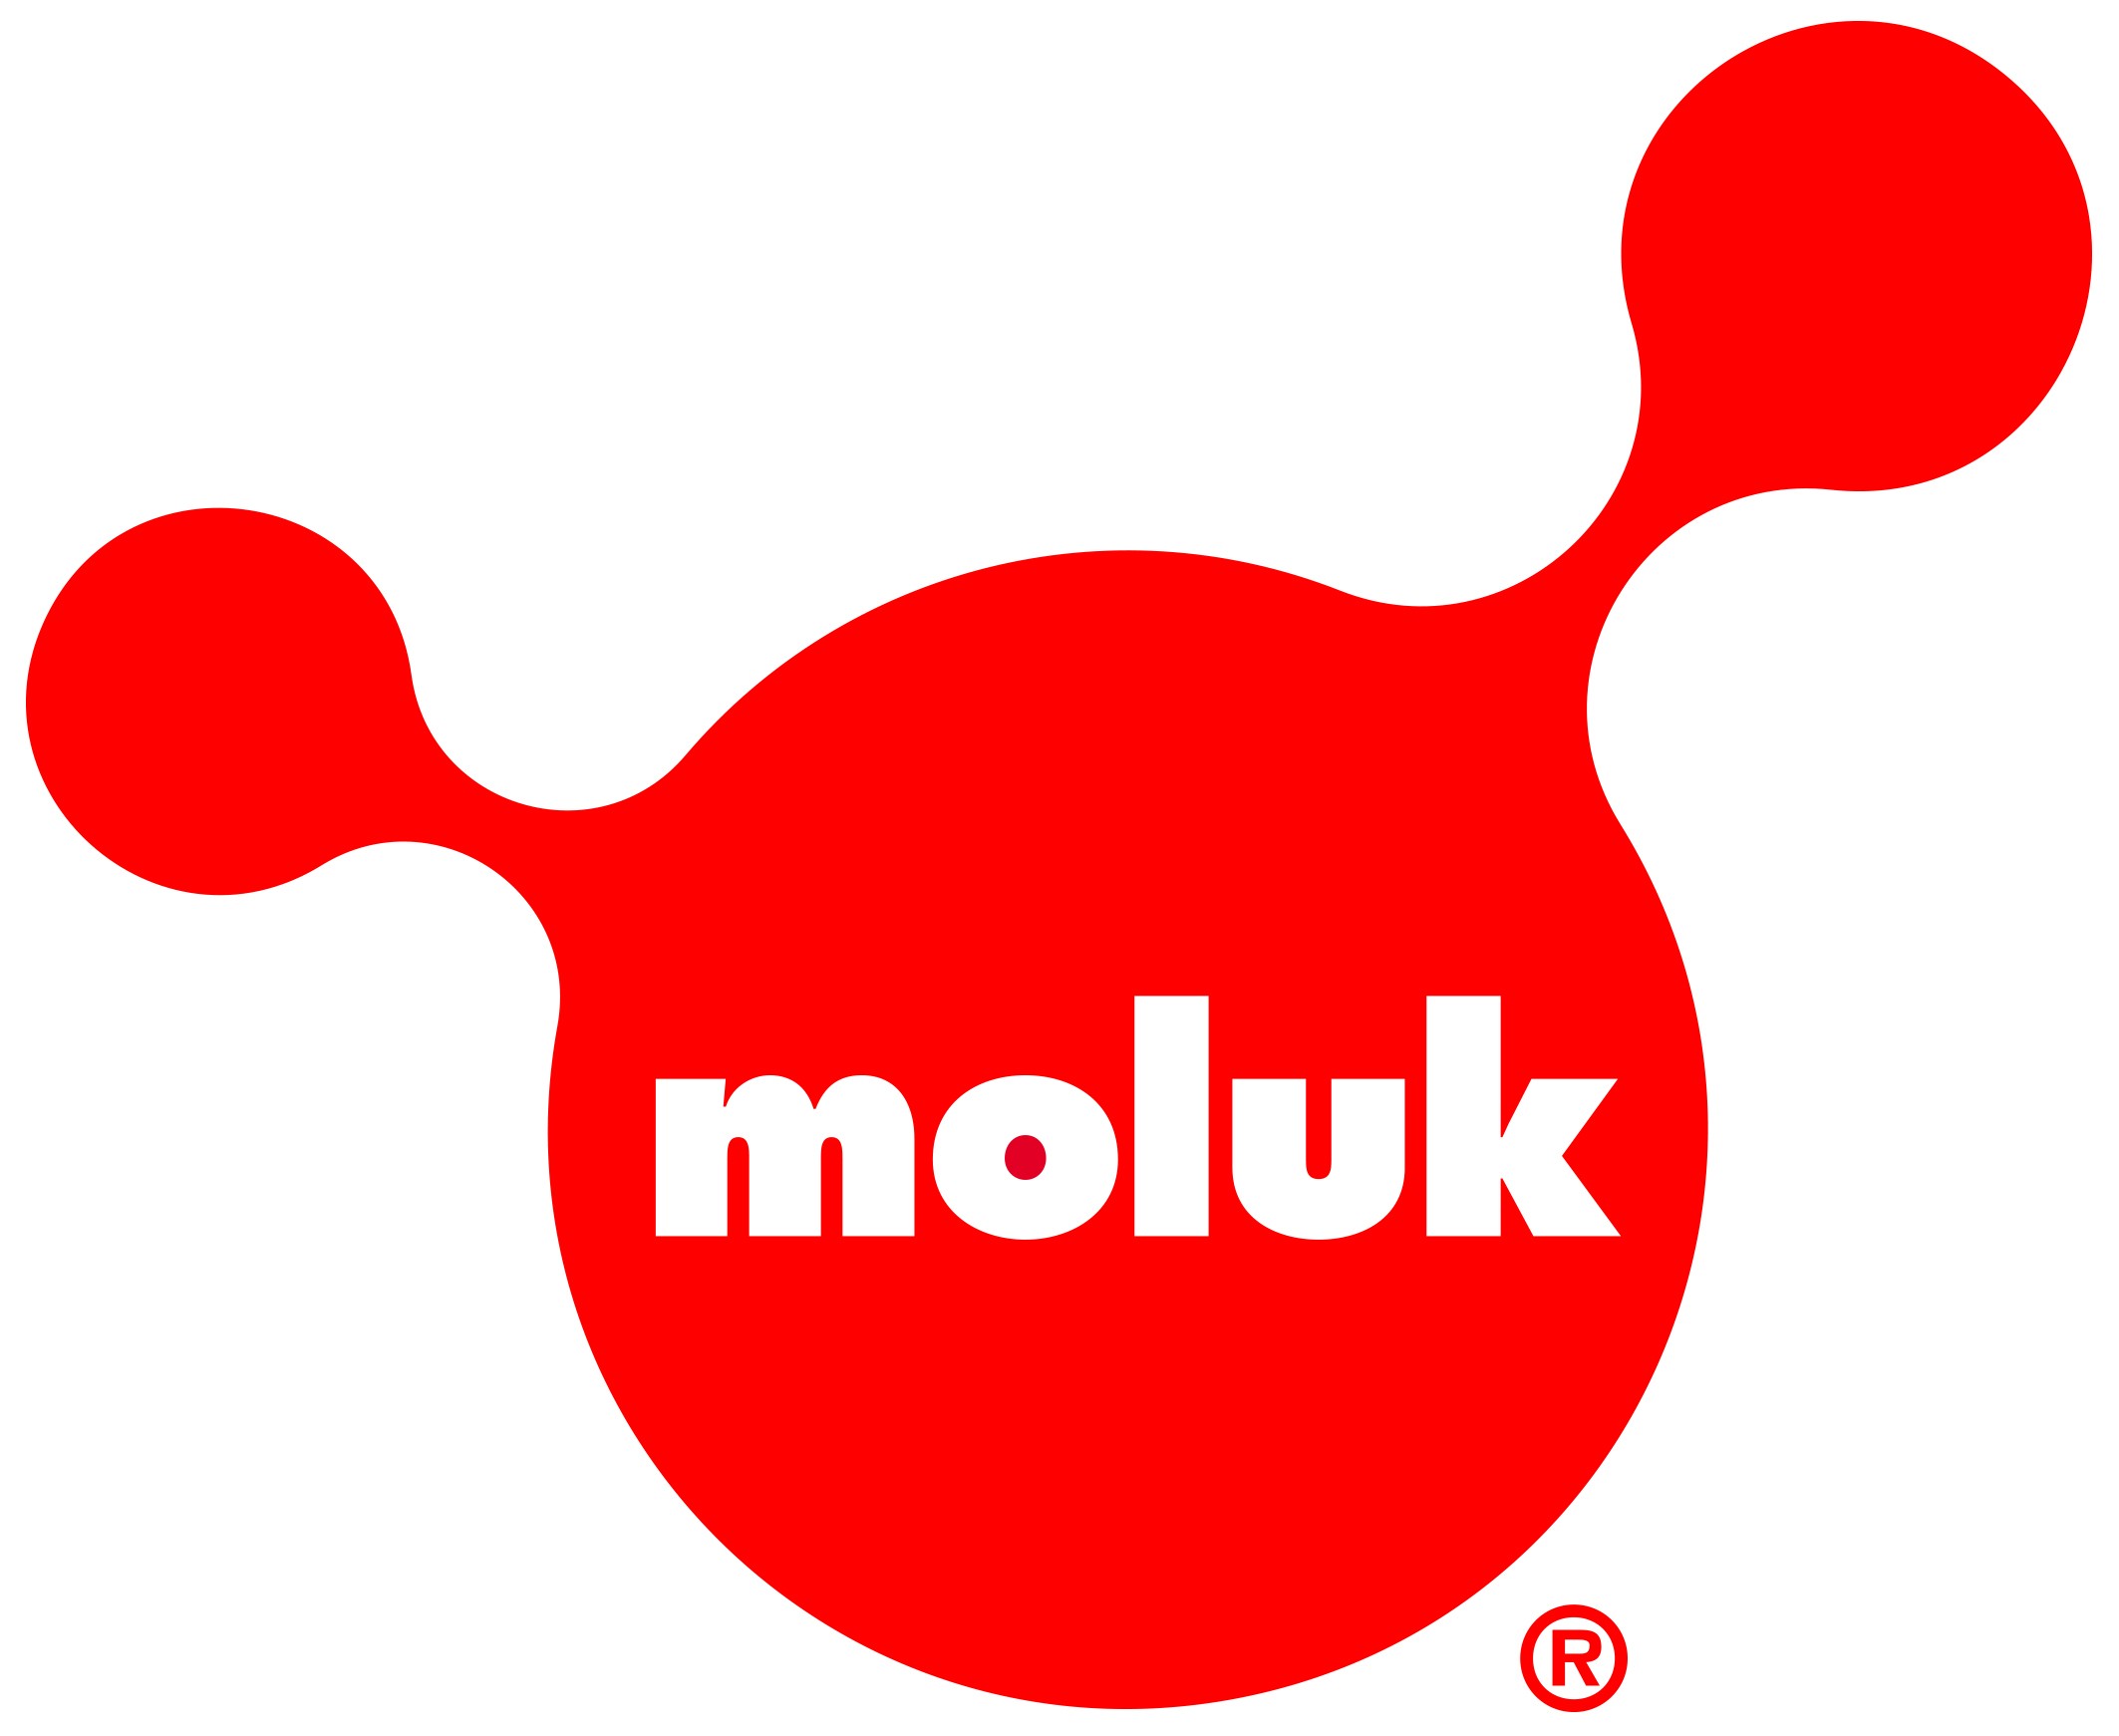 Moluk Products